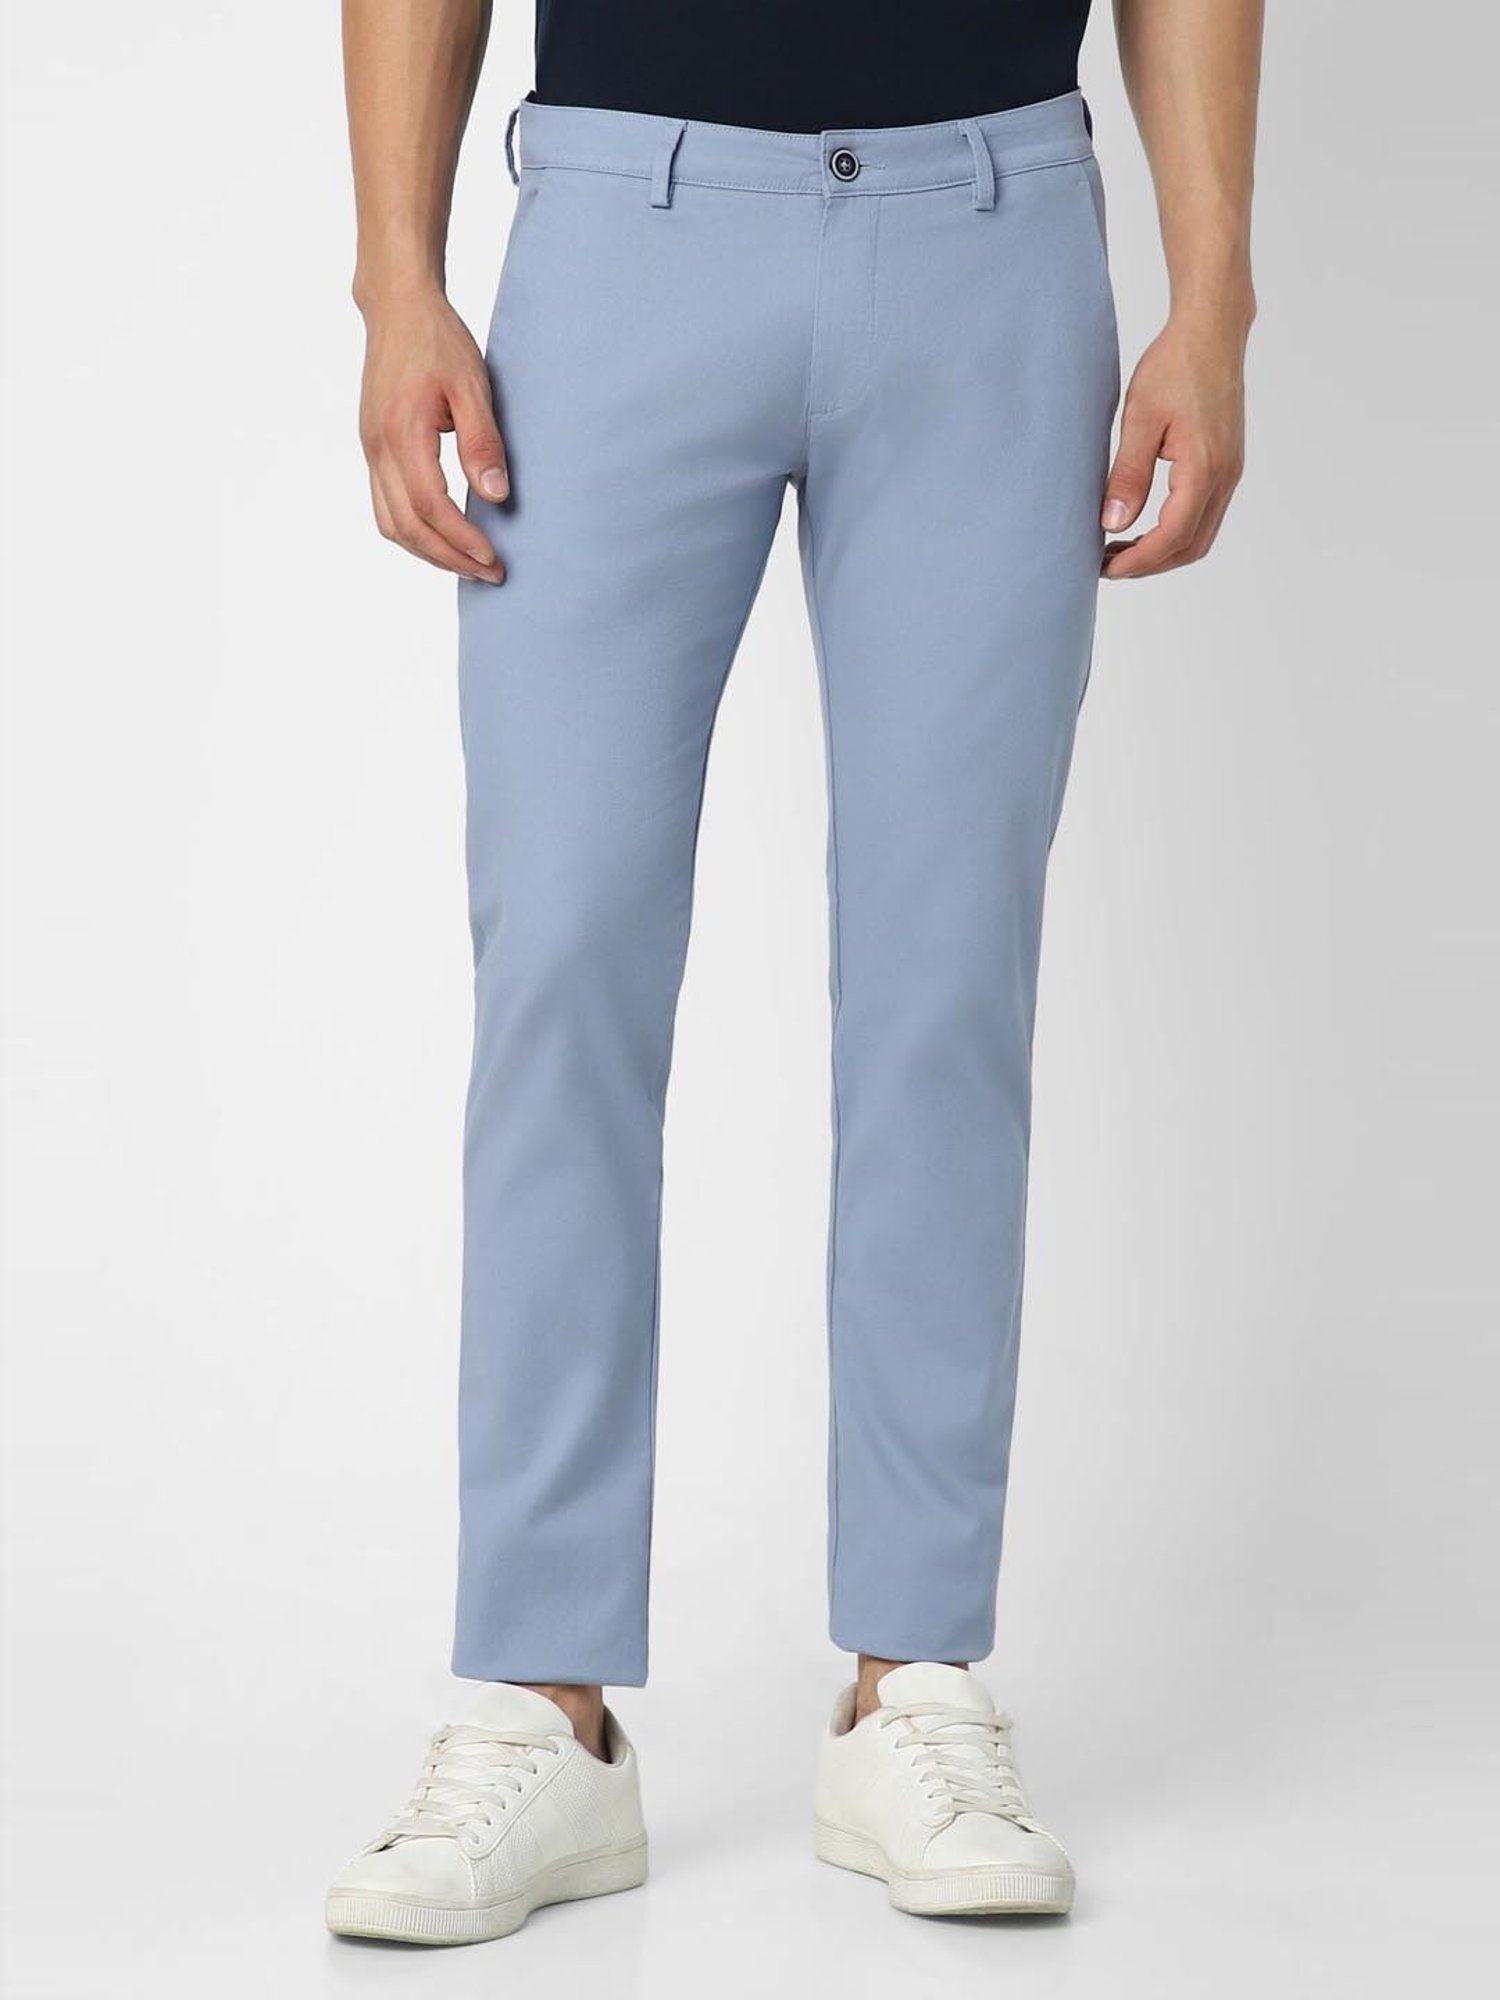 Buy Men Brown Solid Low Skinny Fit Casual Trousers Online  710521  Peter  England